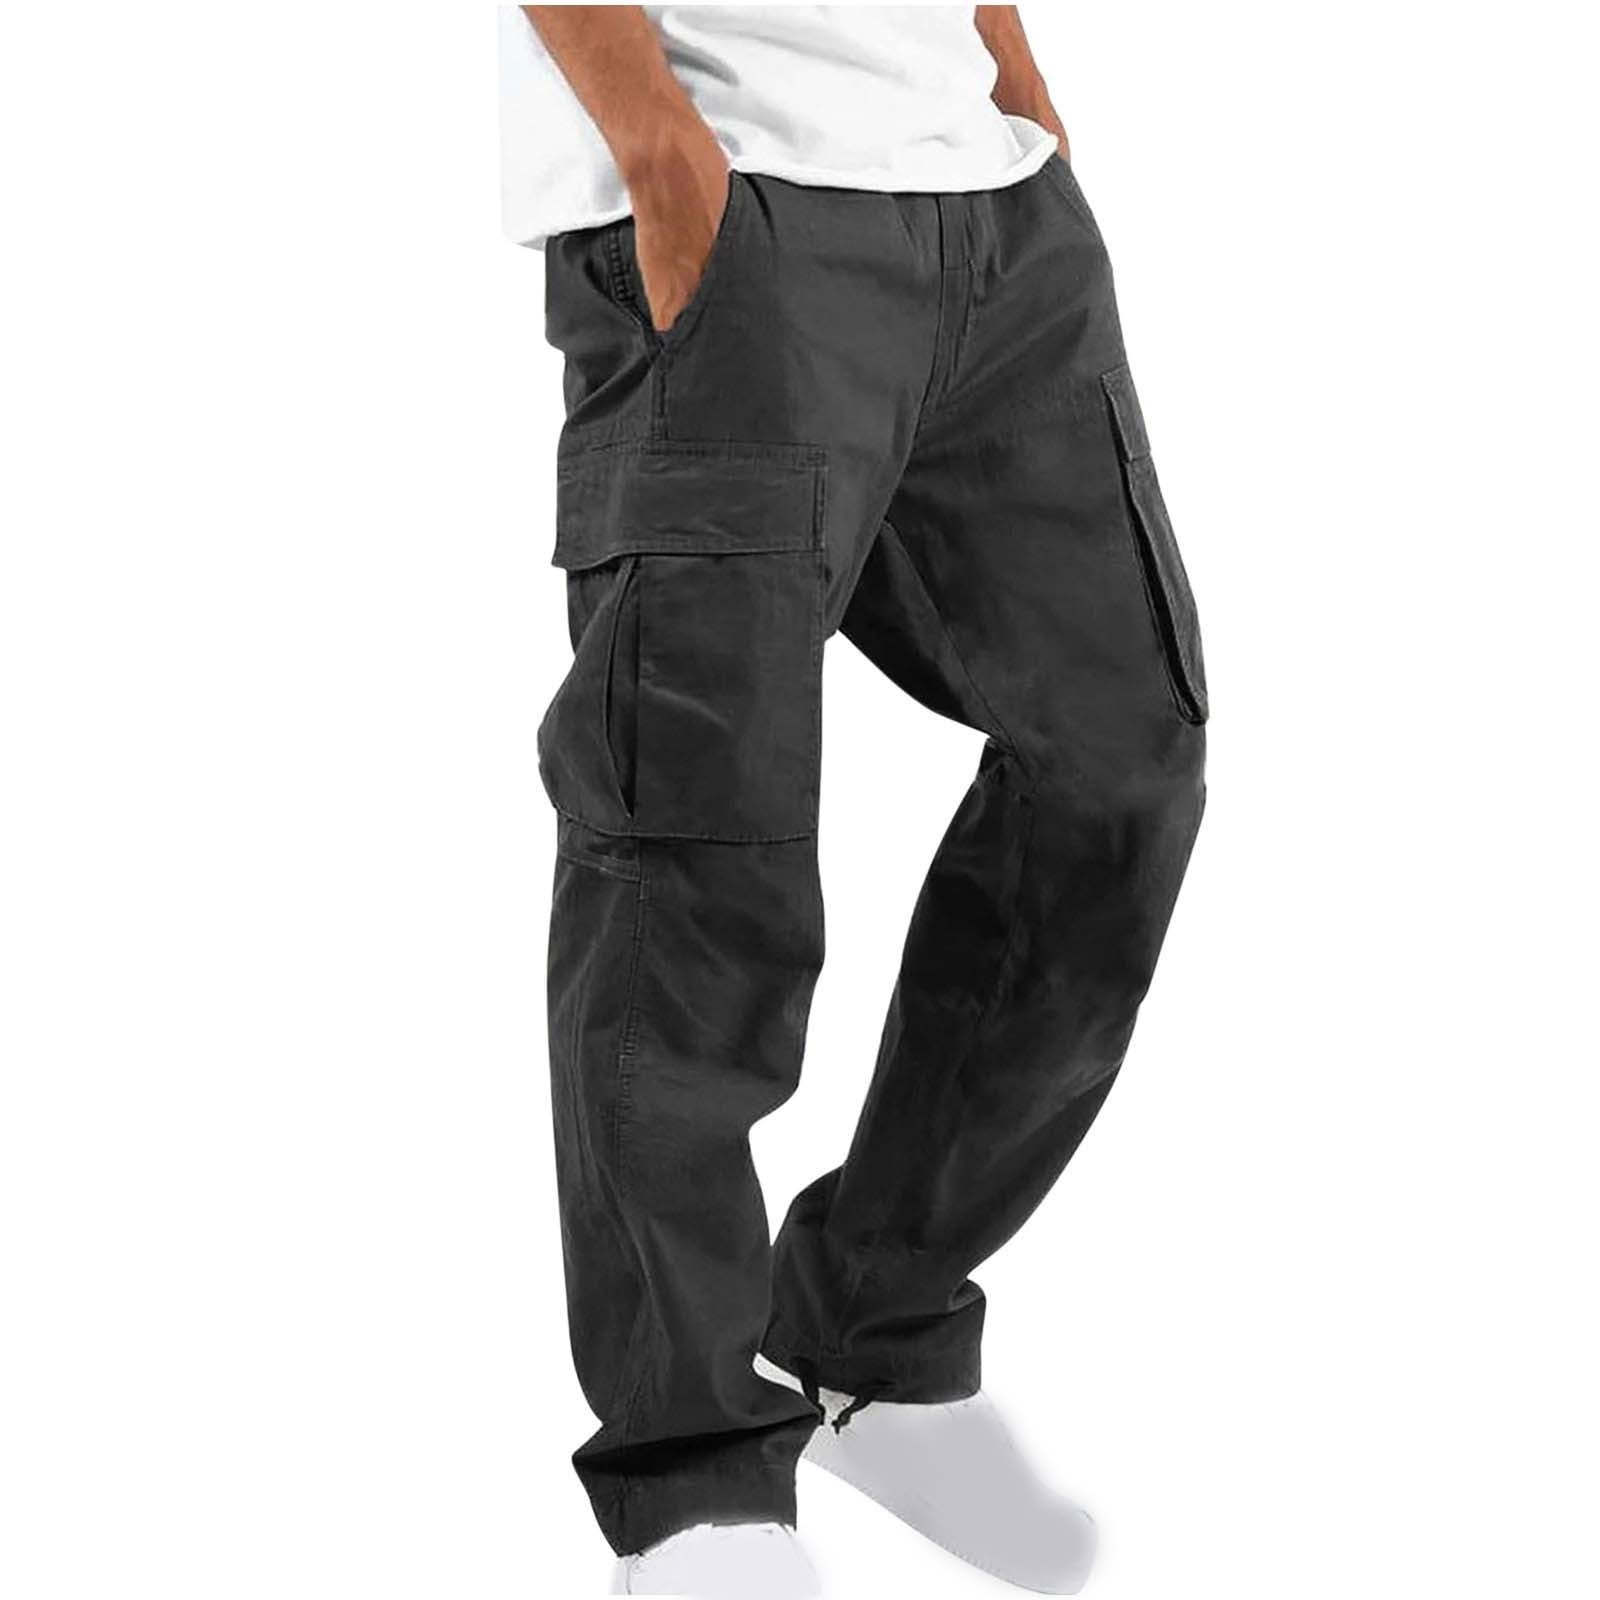 Oalirro Men's Hiking Pants Lightweight Quick Dry Tactical Pants